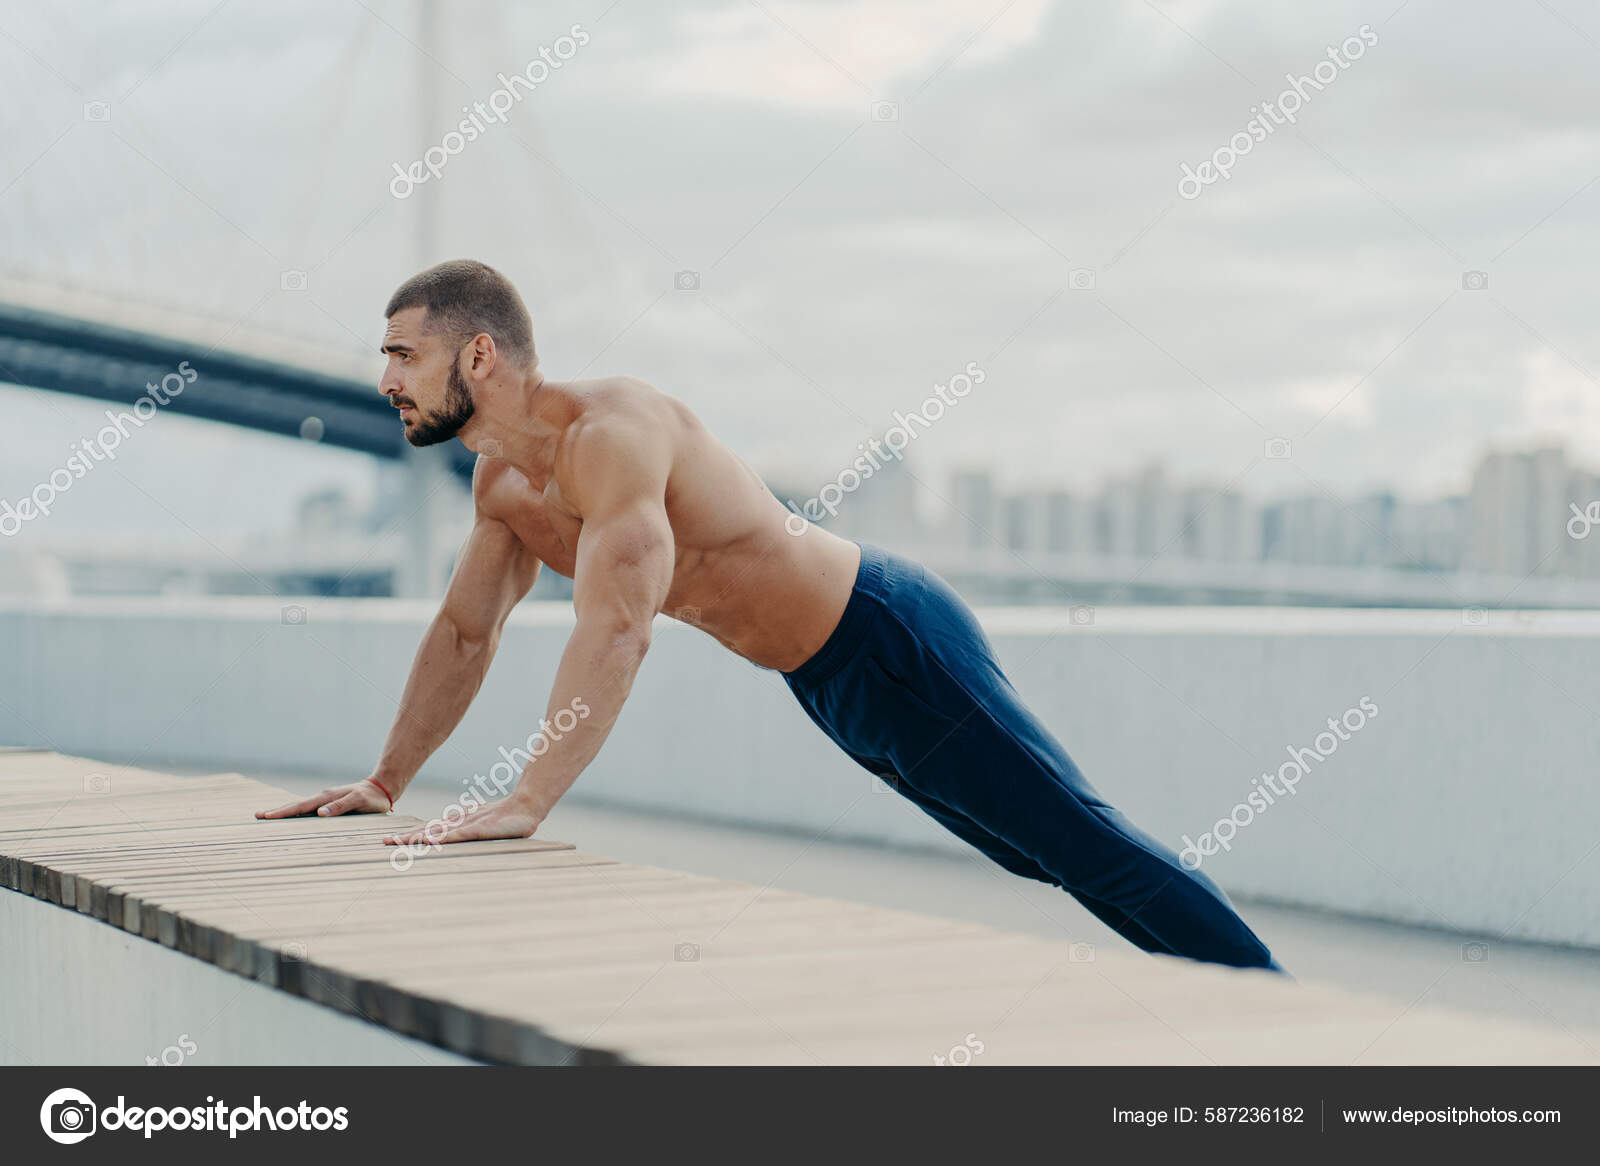 Naked Bodybuilder Posing While Doing Push-ups Stock Photo